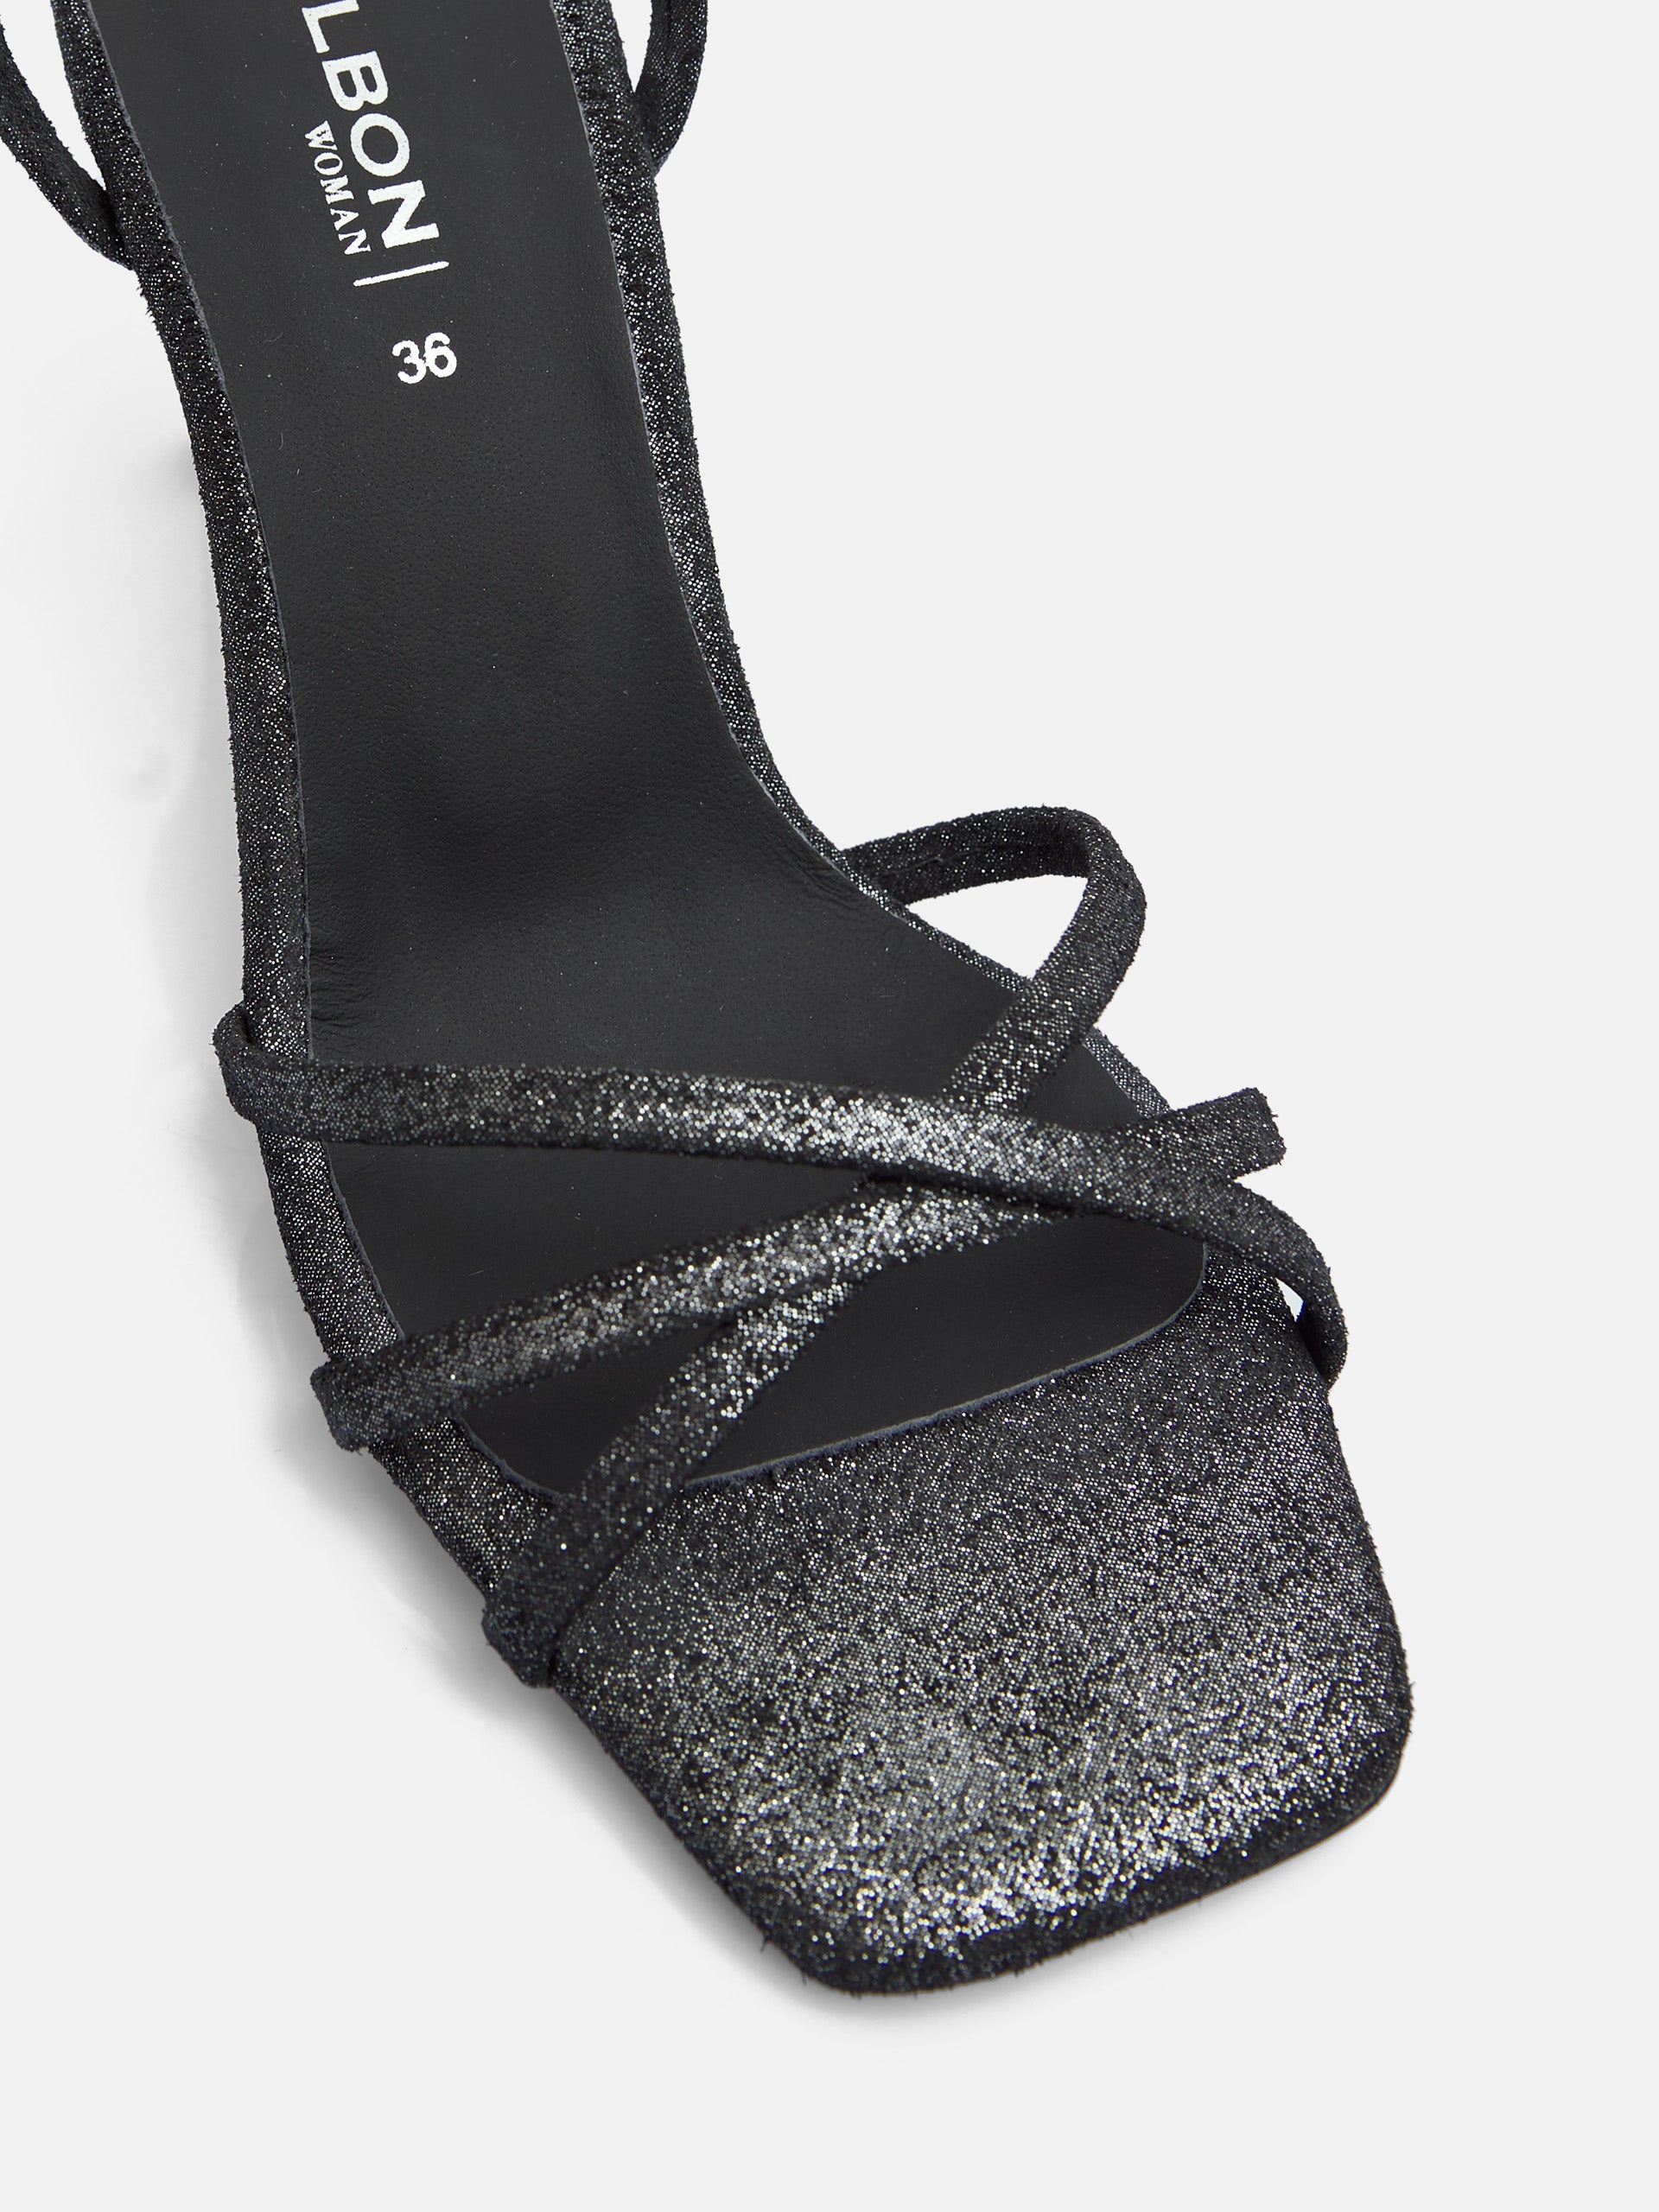 Black strap heel sandal